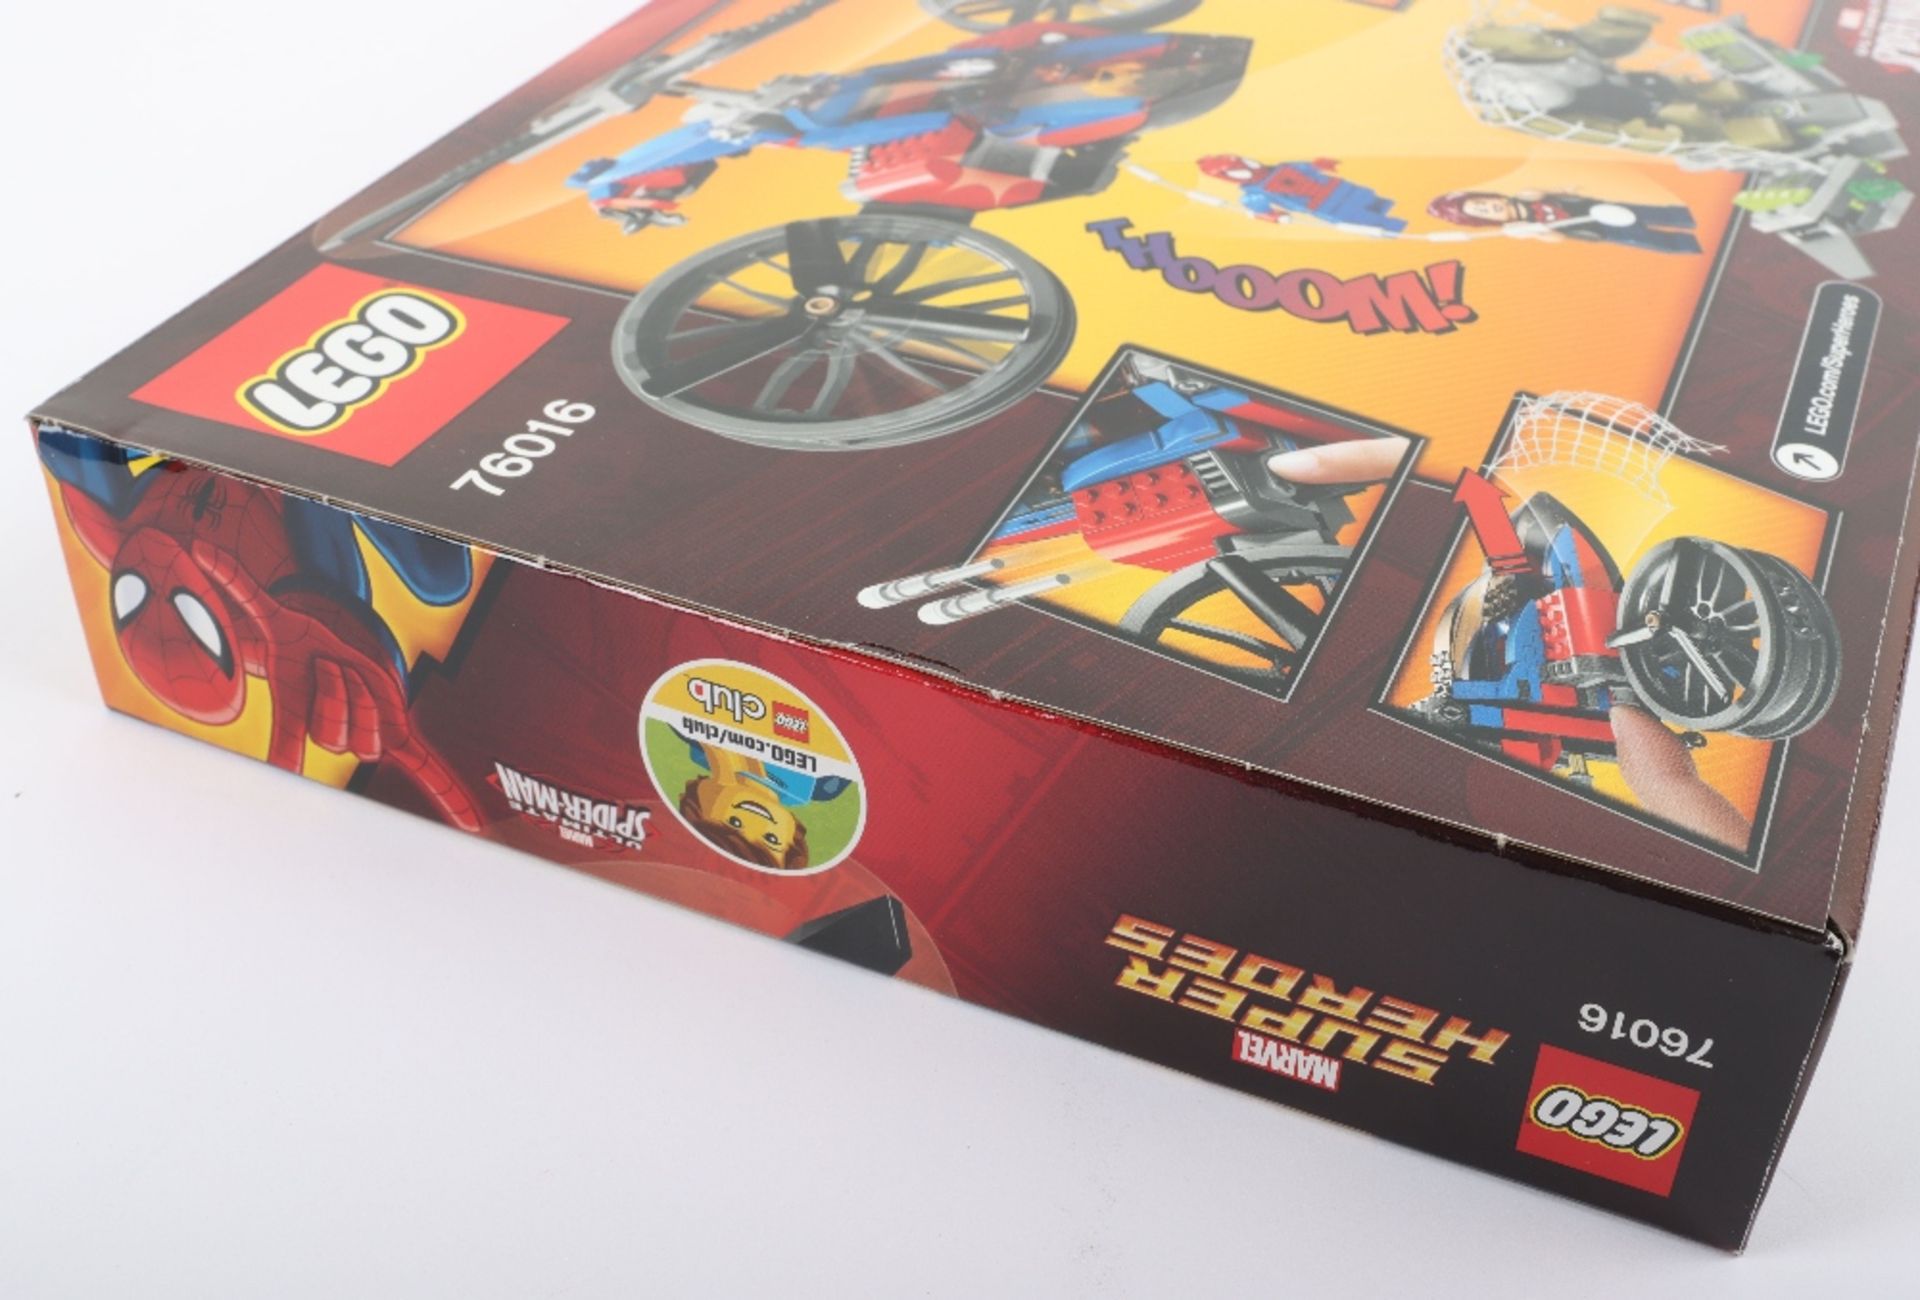 Lego Marvel Superheroes 76016 Spider-helicopter rescue sealed set - Image 2 of 7